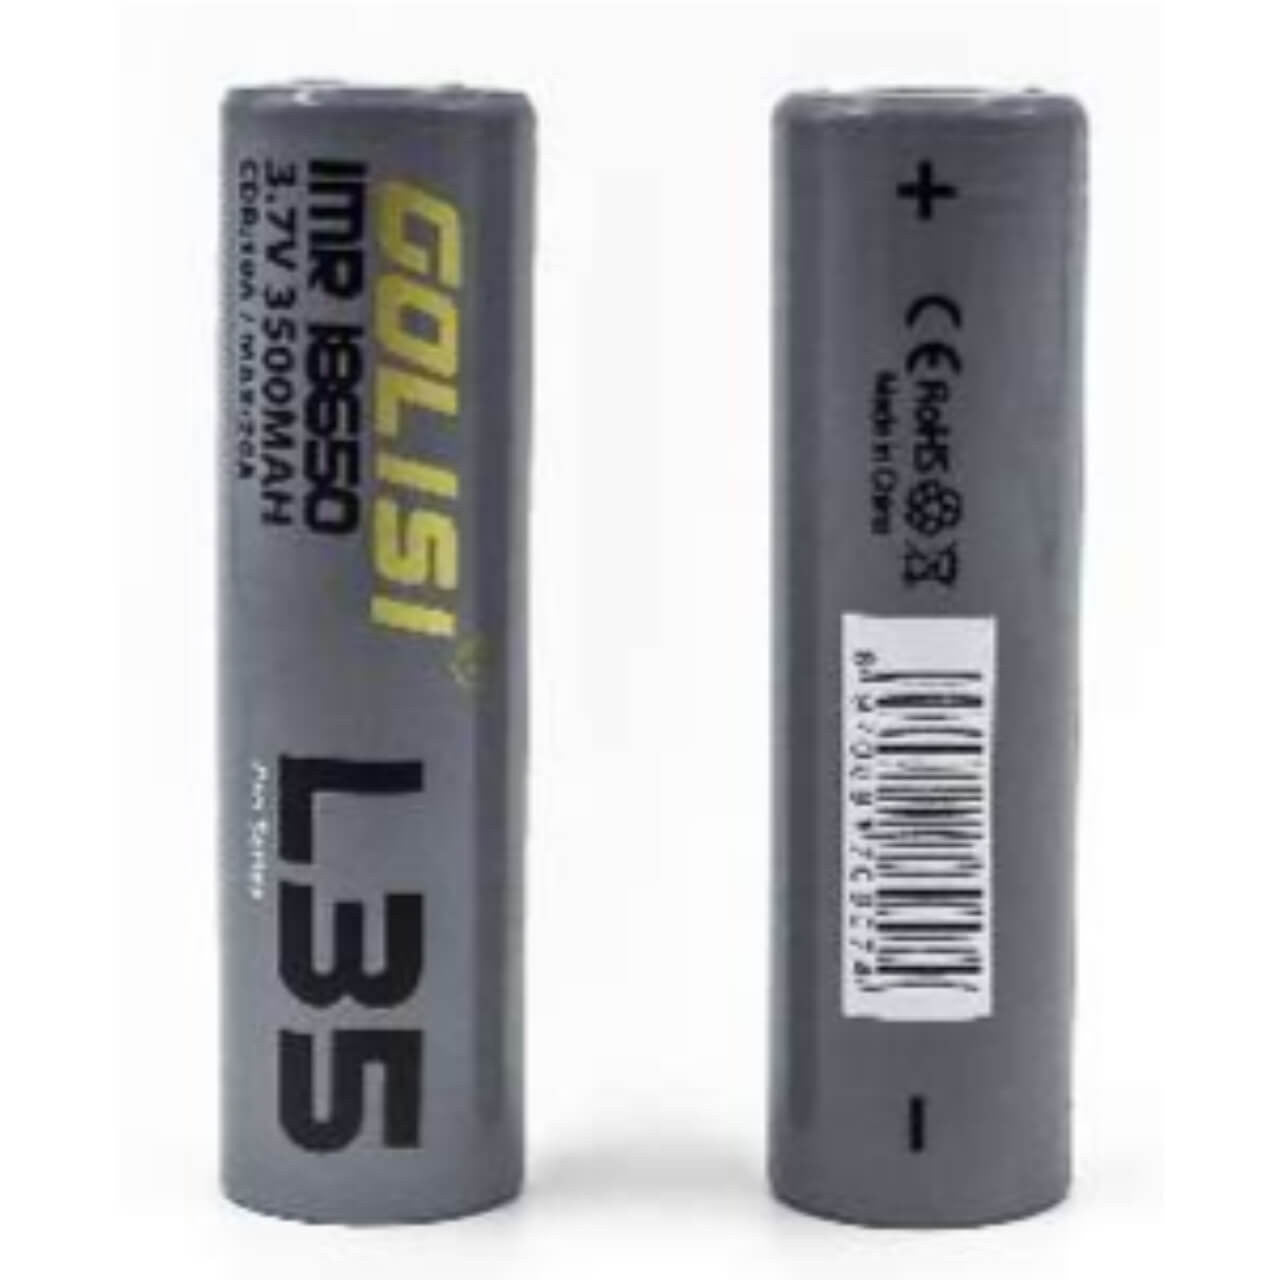 Golisi L35 3500mAh 10A 18650 Battery | Pack of 2 Battery